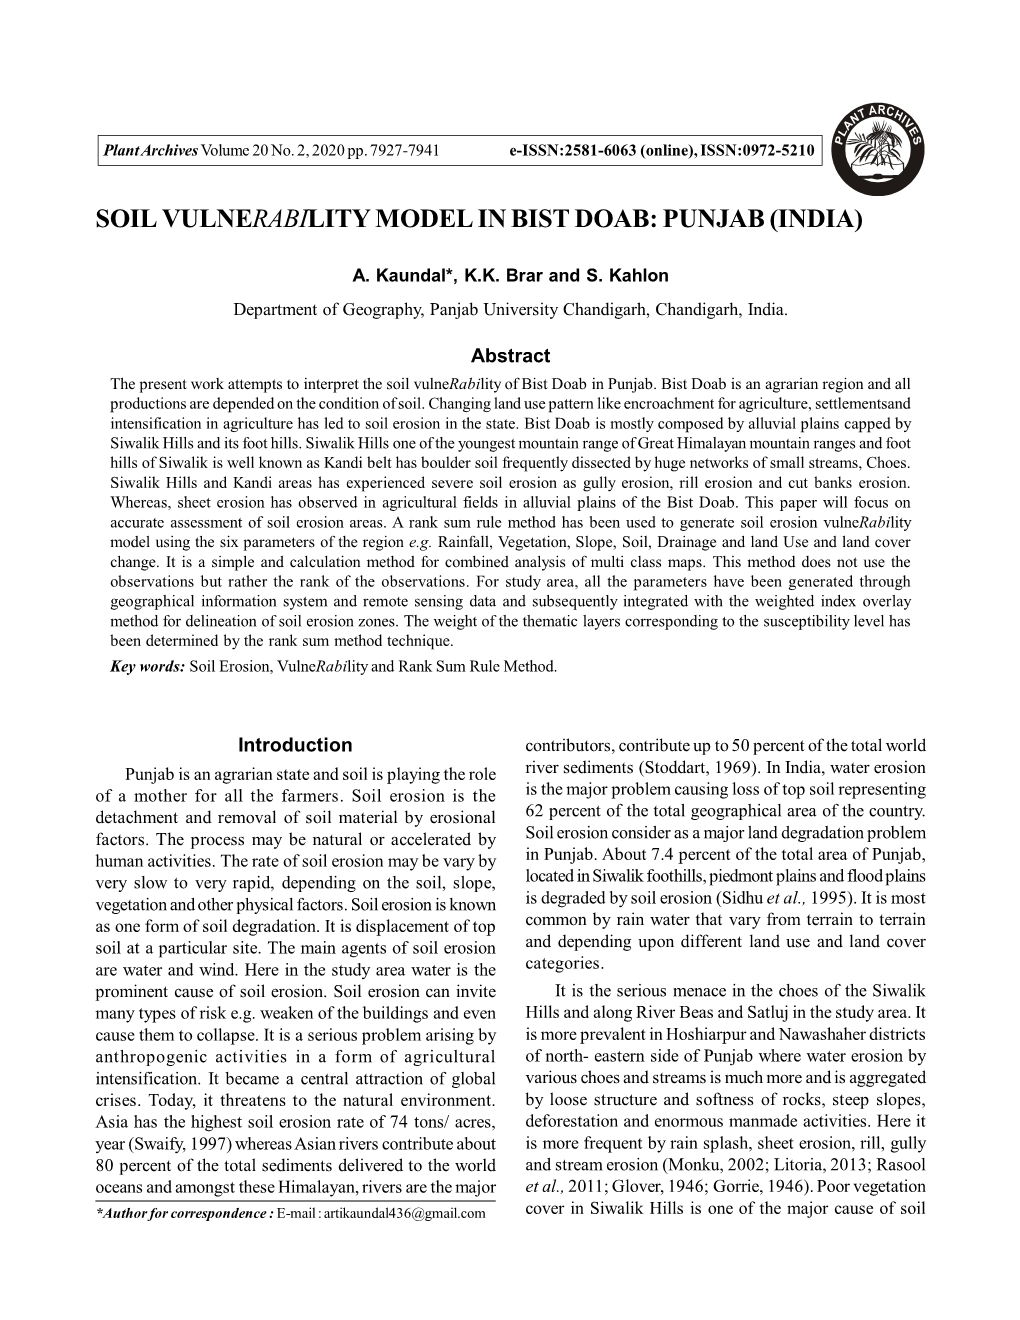 Soil Vulnerability Model in Bist Doab: Punjab (India)